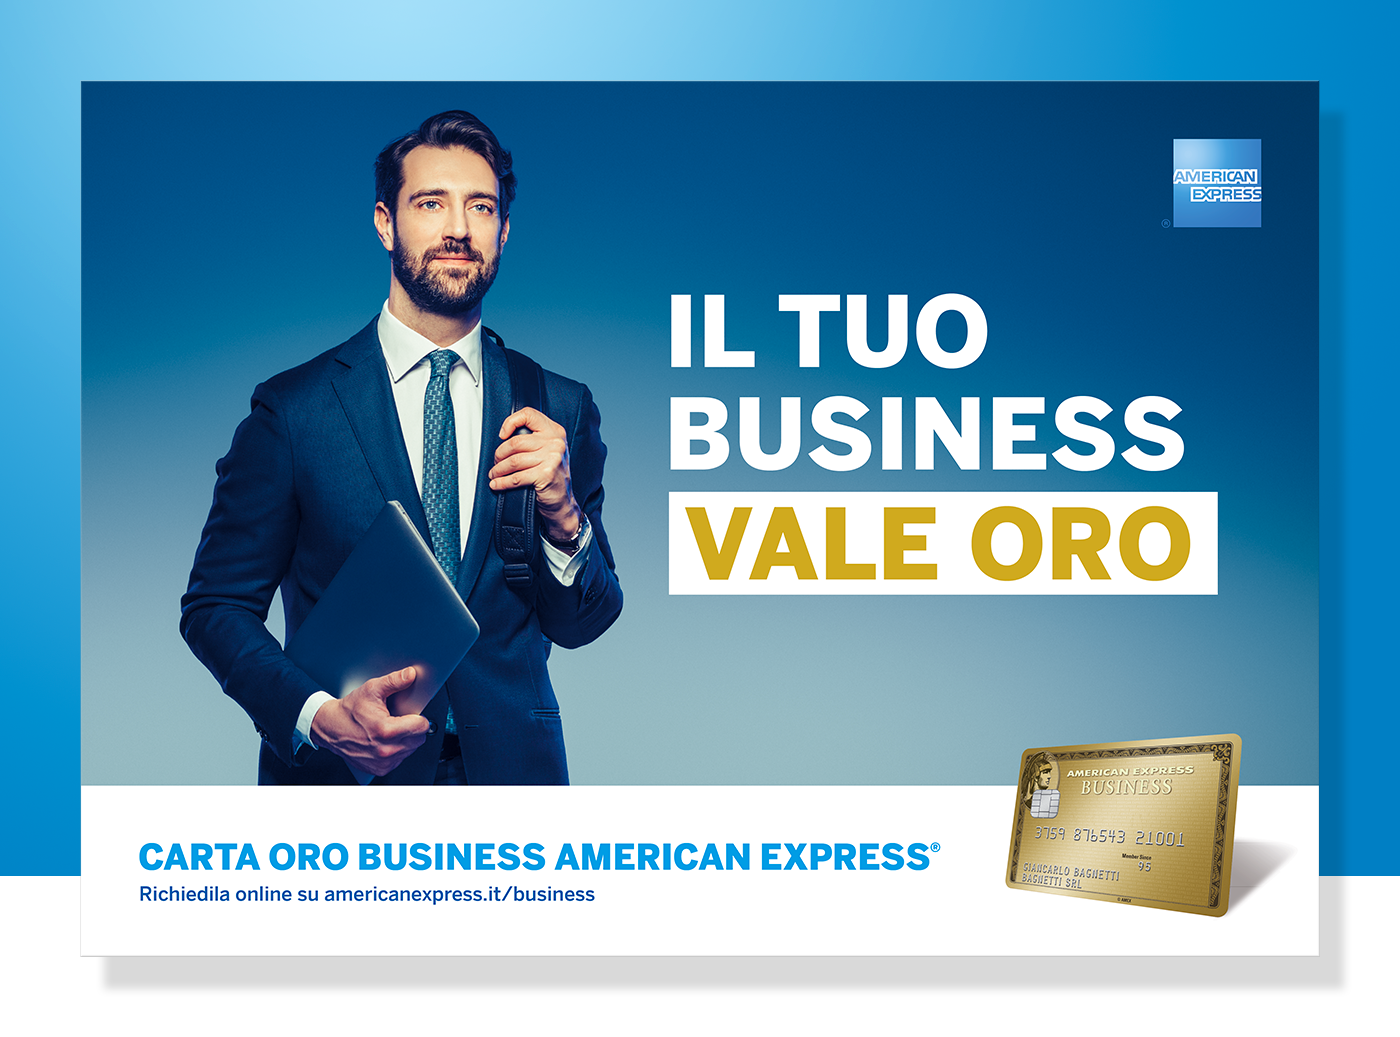 atl campaign American Express business credit card gold camagna photographer Web print